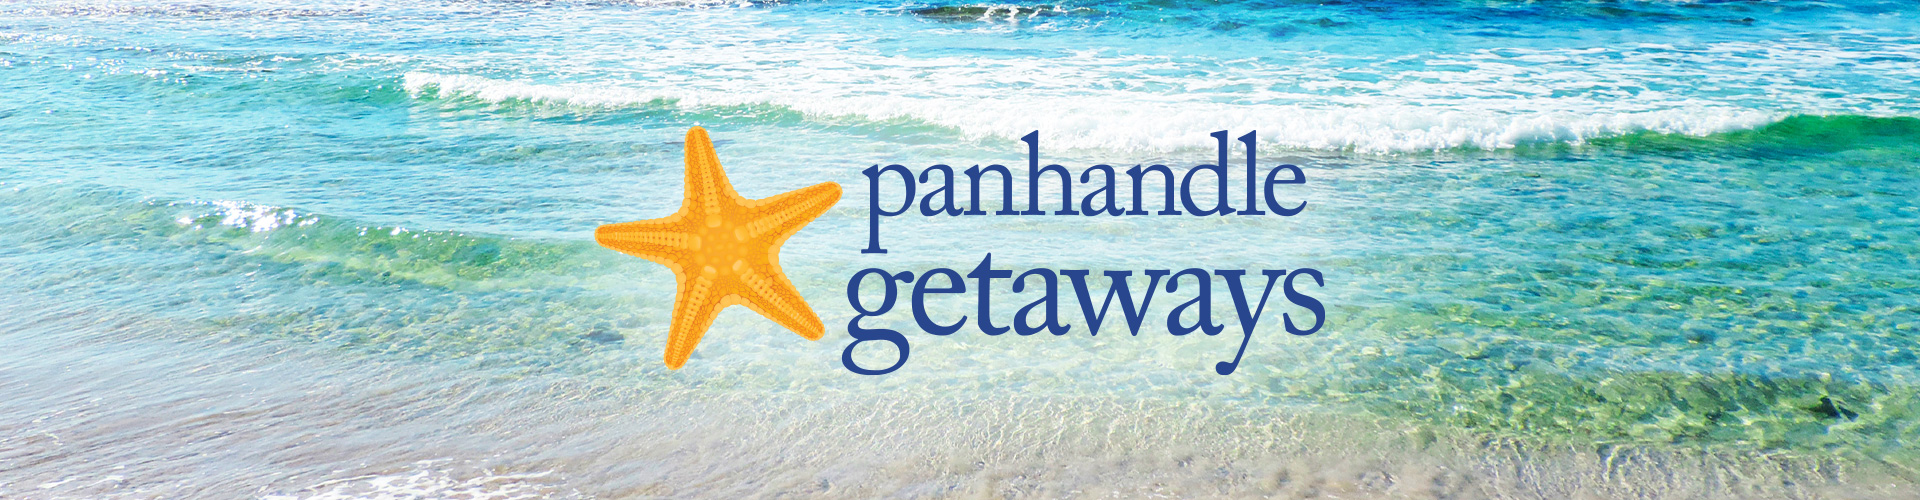 Panhandle Getaways PCB EP Banner